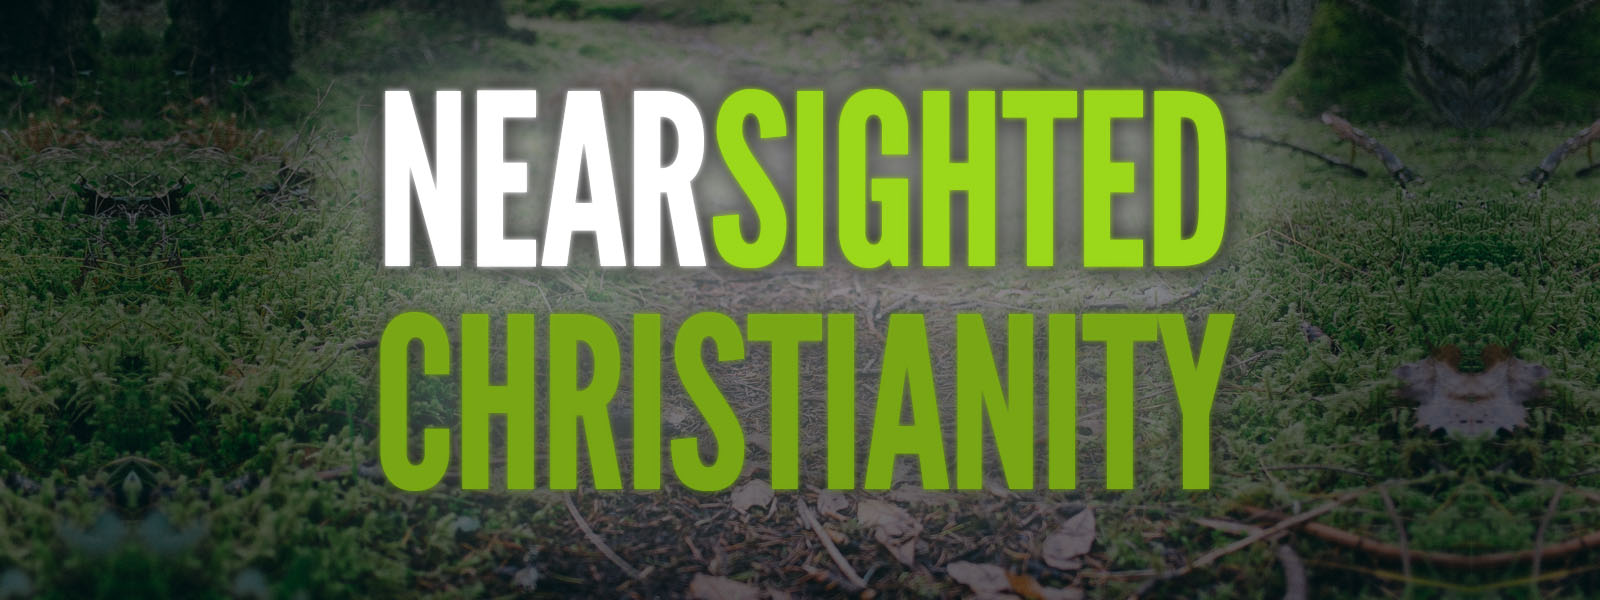 Near-sighted Christianity